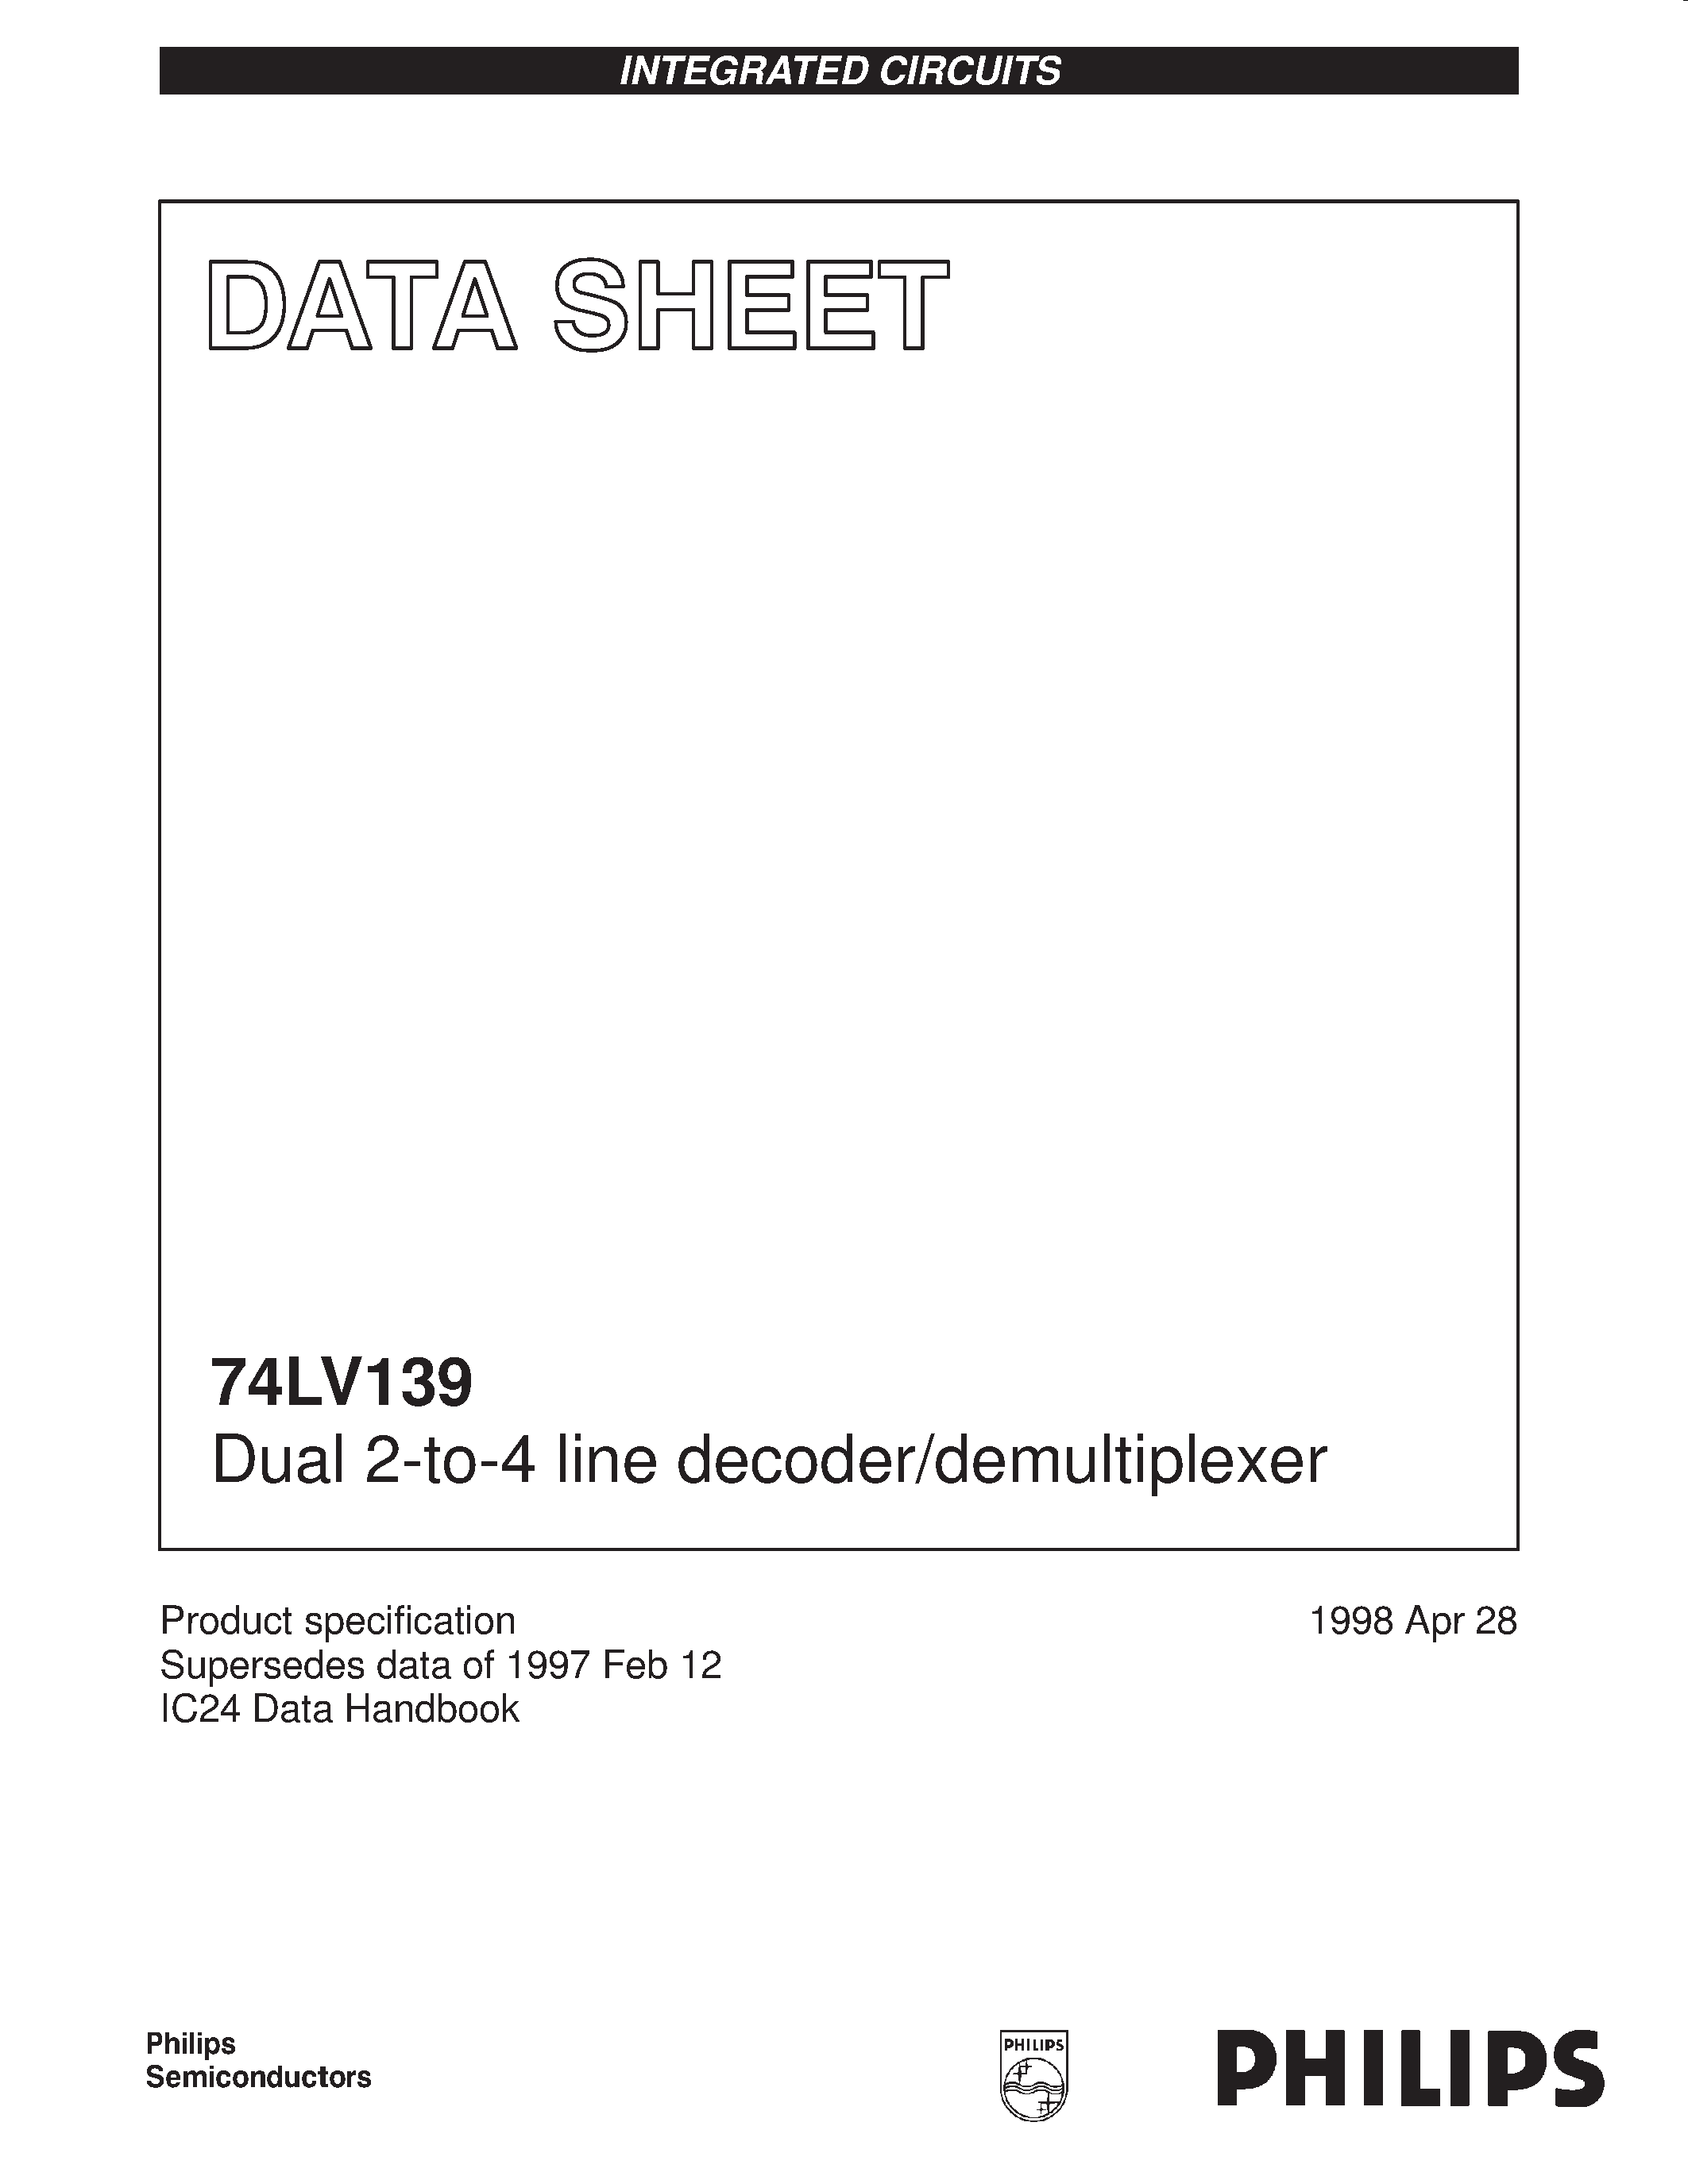 Даташит 74LV139 - Dual 2-to-4 line decoder/demultiplexer страница 1